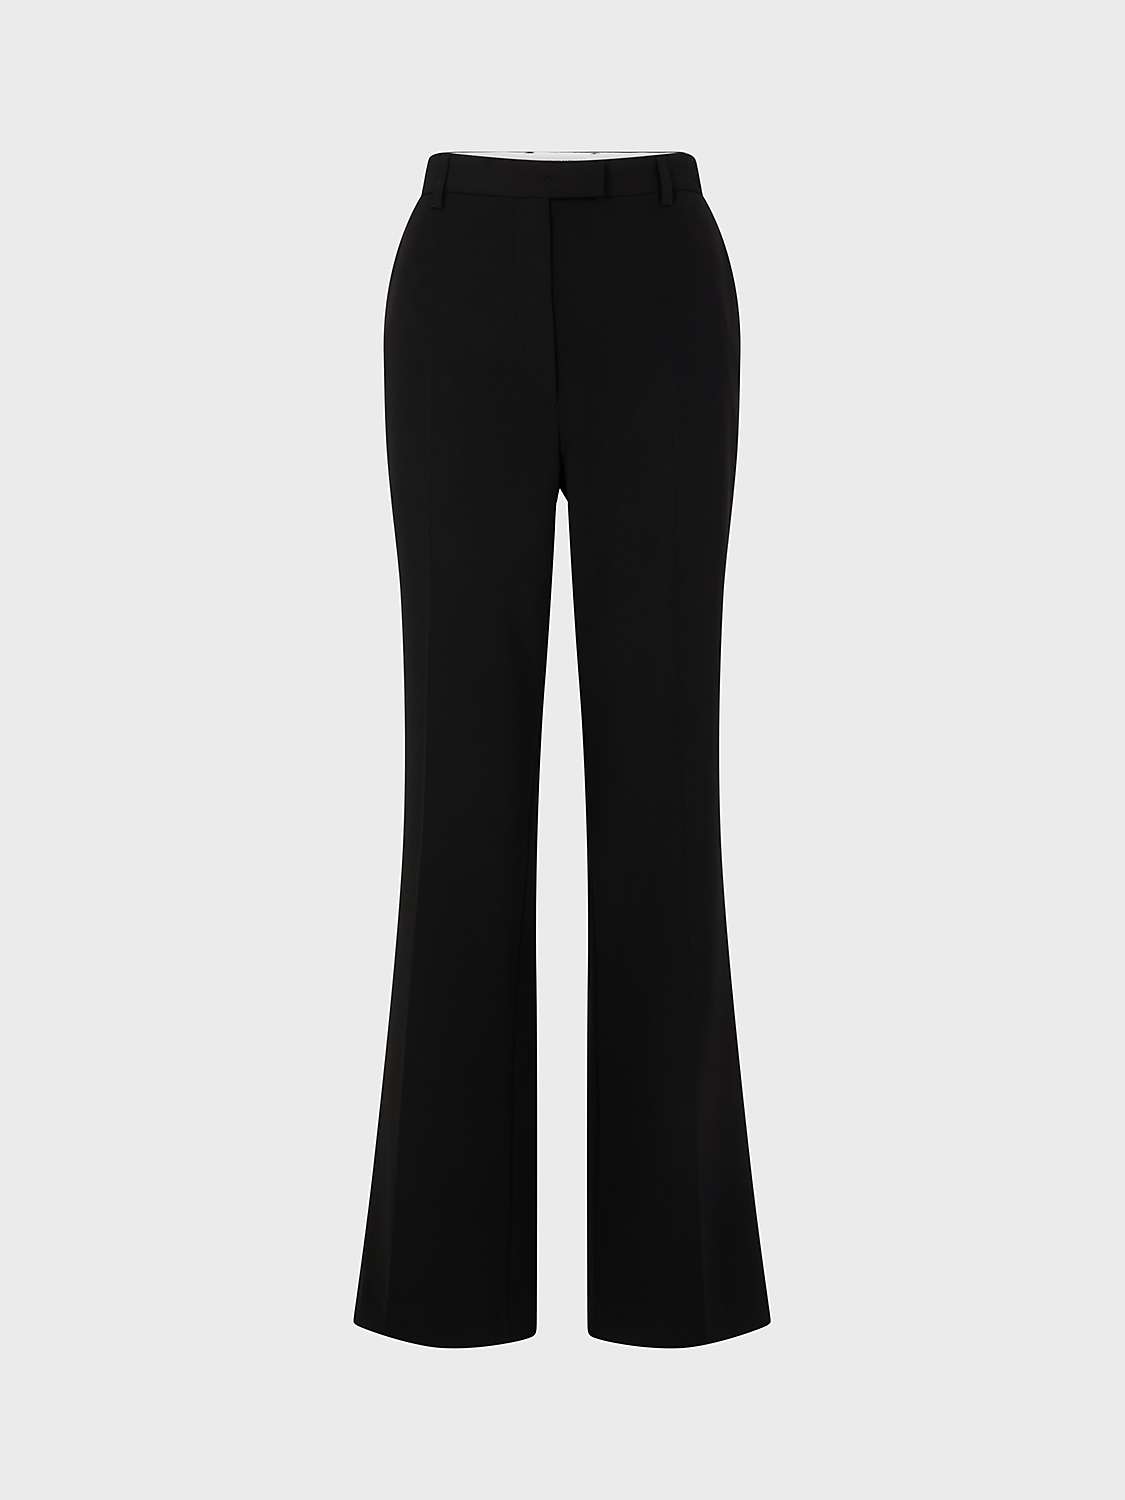 Buy Gerard Darel Cassiopee Trousers, Black Online at johnlewis.com